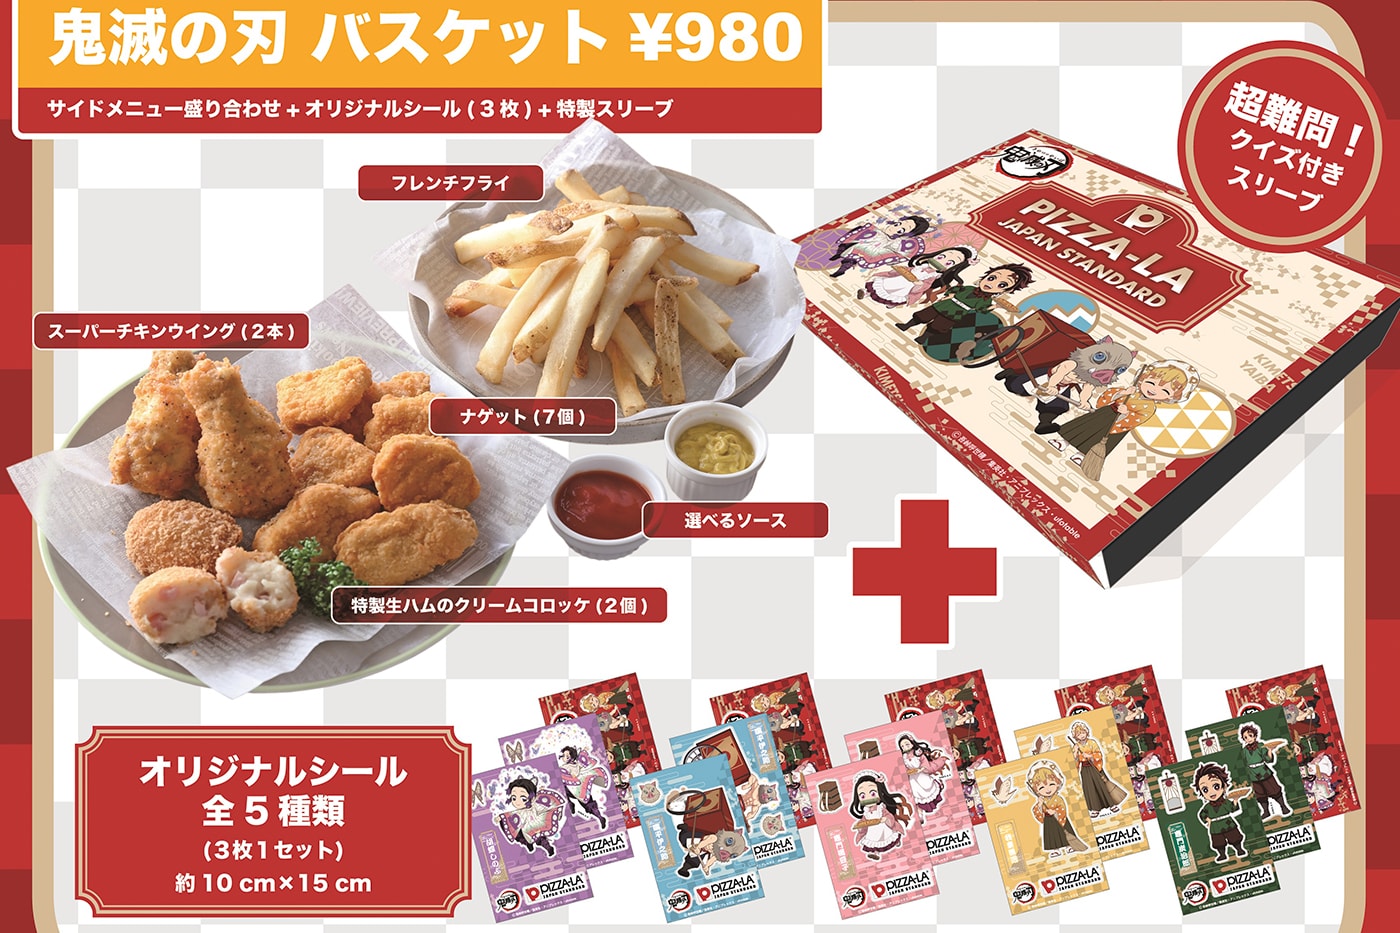 Demon Slayer Pizza-la pizza pack release Tanjiro ufotable anime manga Japan Pizza food 